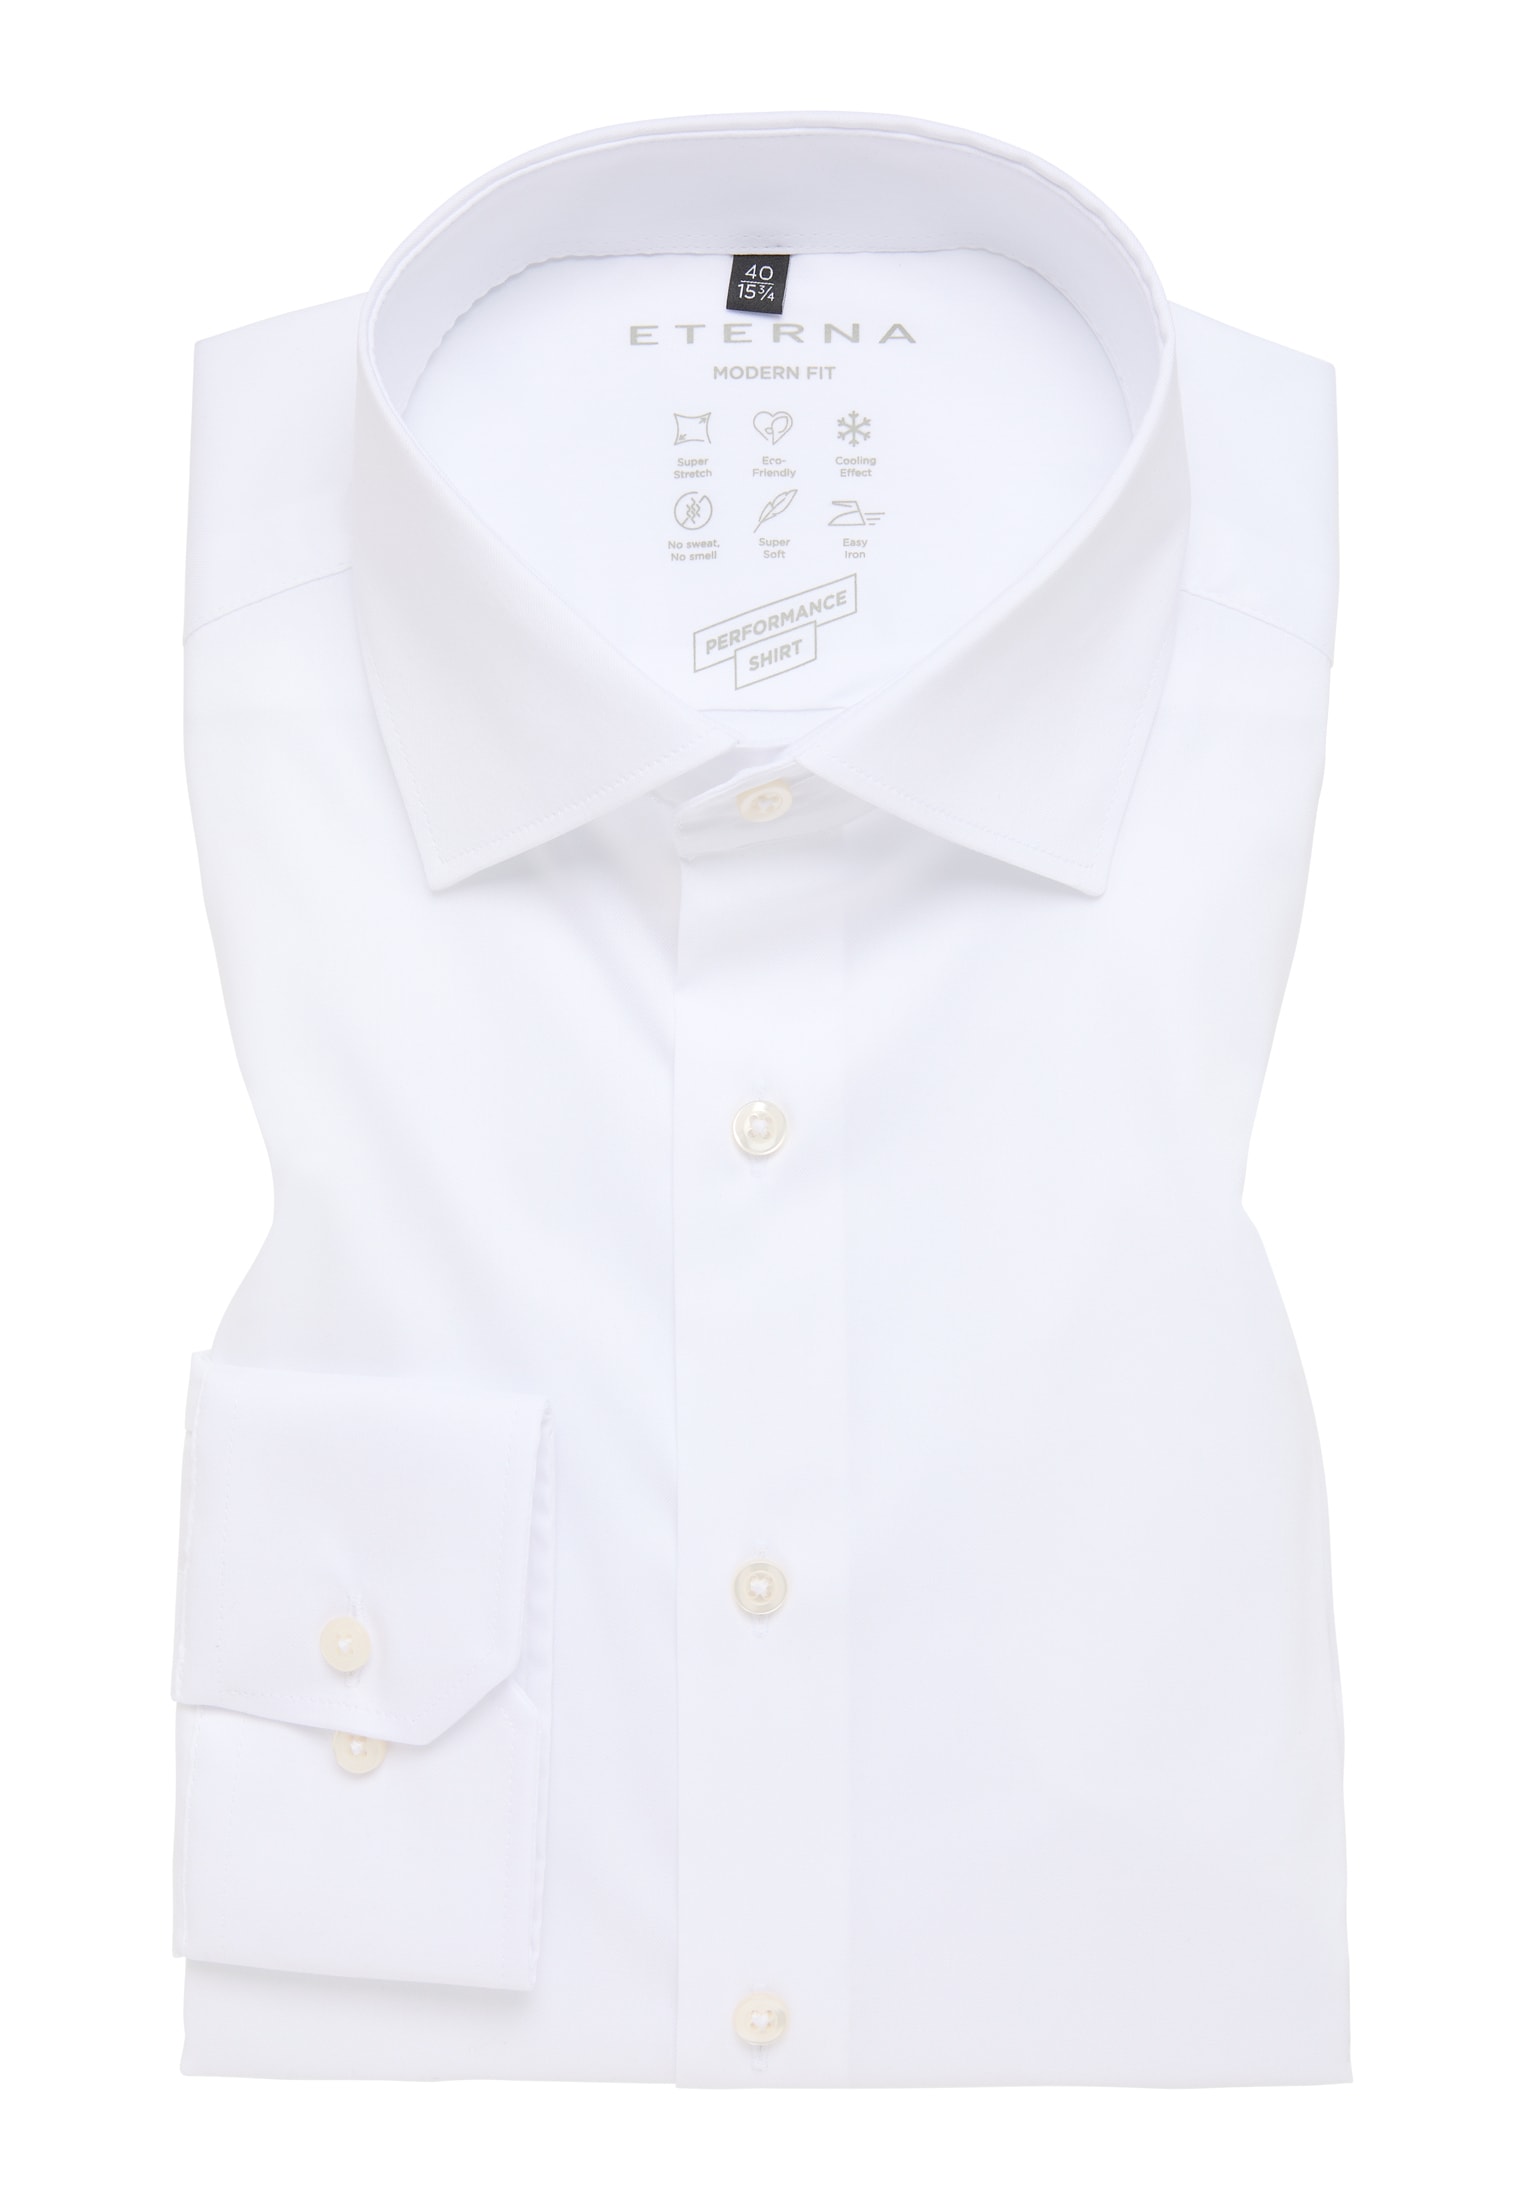 MODERN FIT Performance Shirt in weiß unifarben | weiß | 40 | Langarm |  1SH02224-00-01-40-1/1